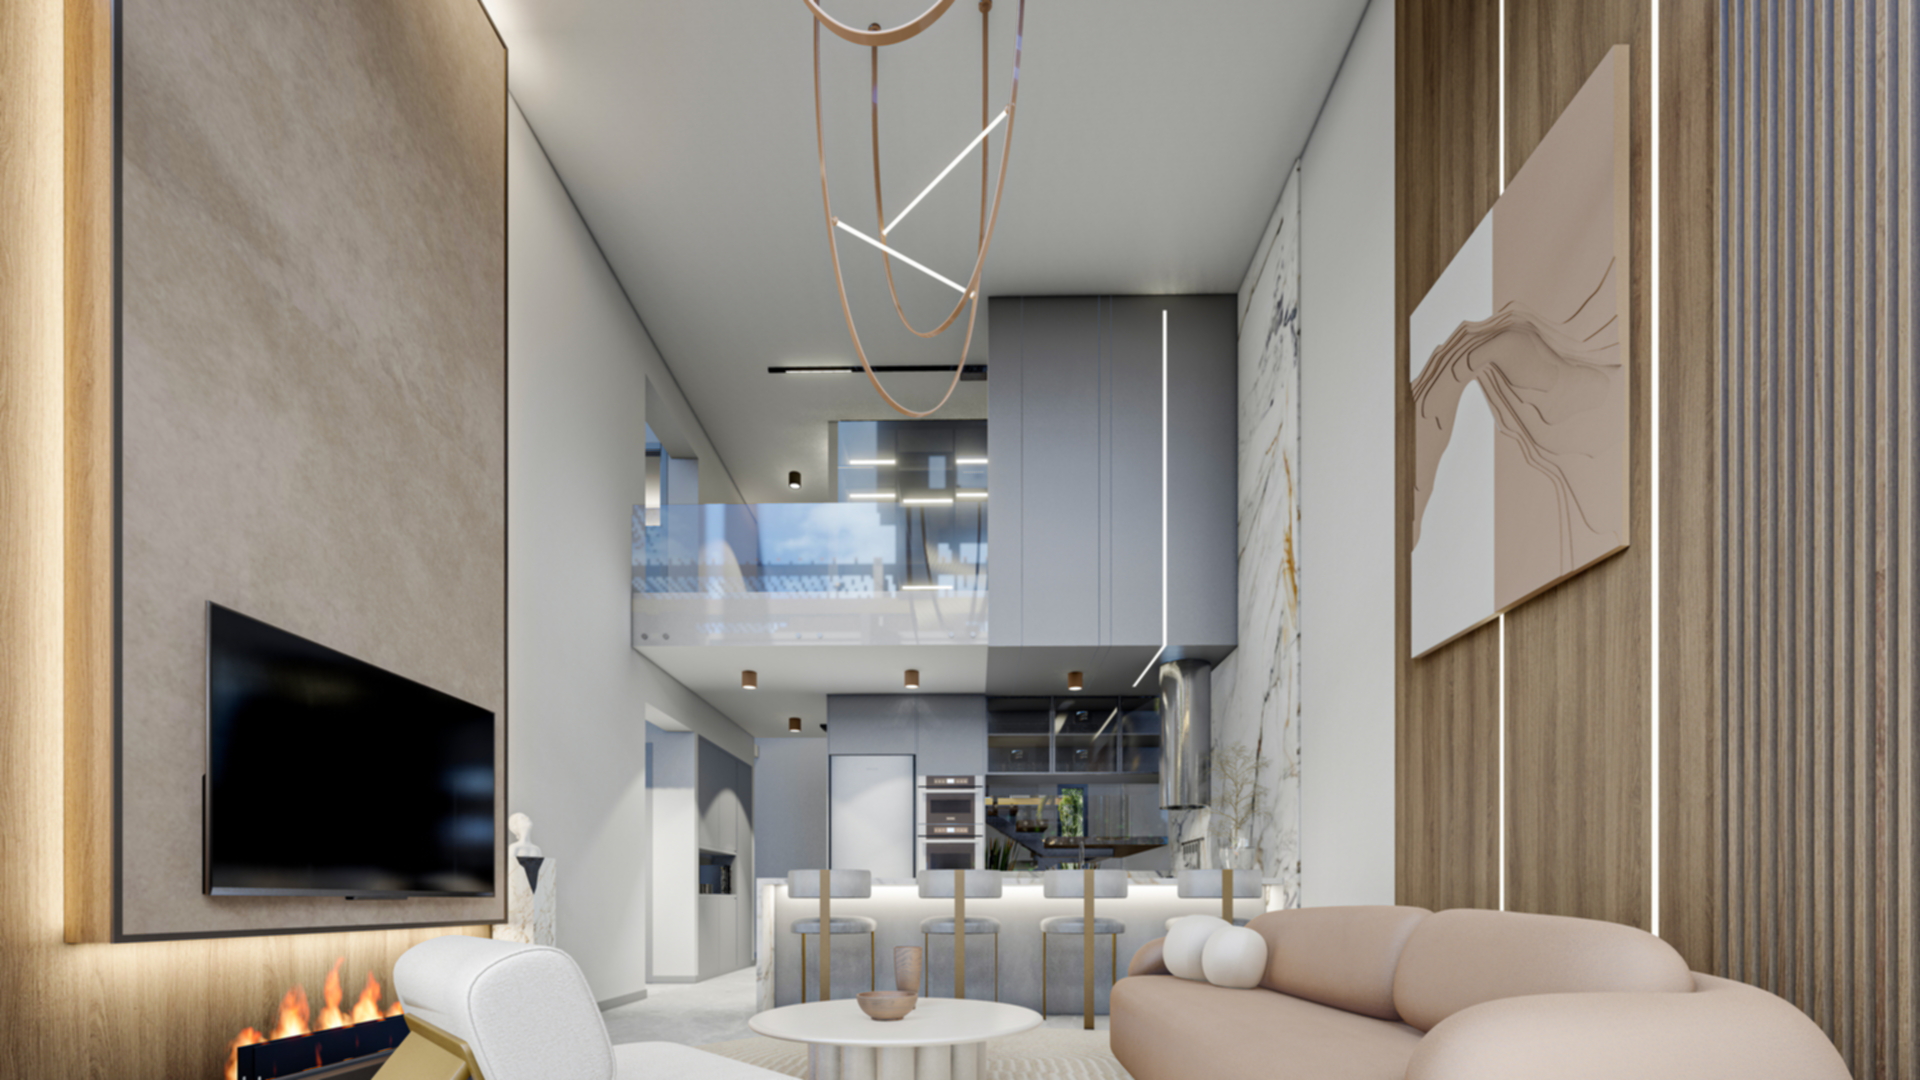 شقة 2+1 في فولنا بلو | مشروع سيبارجوس